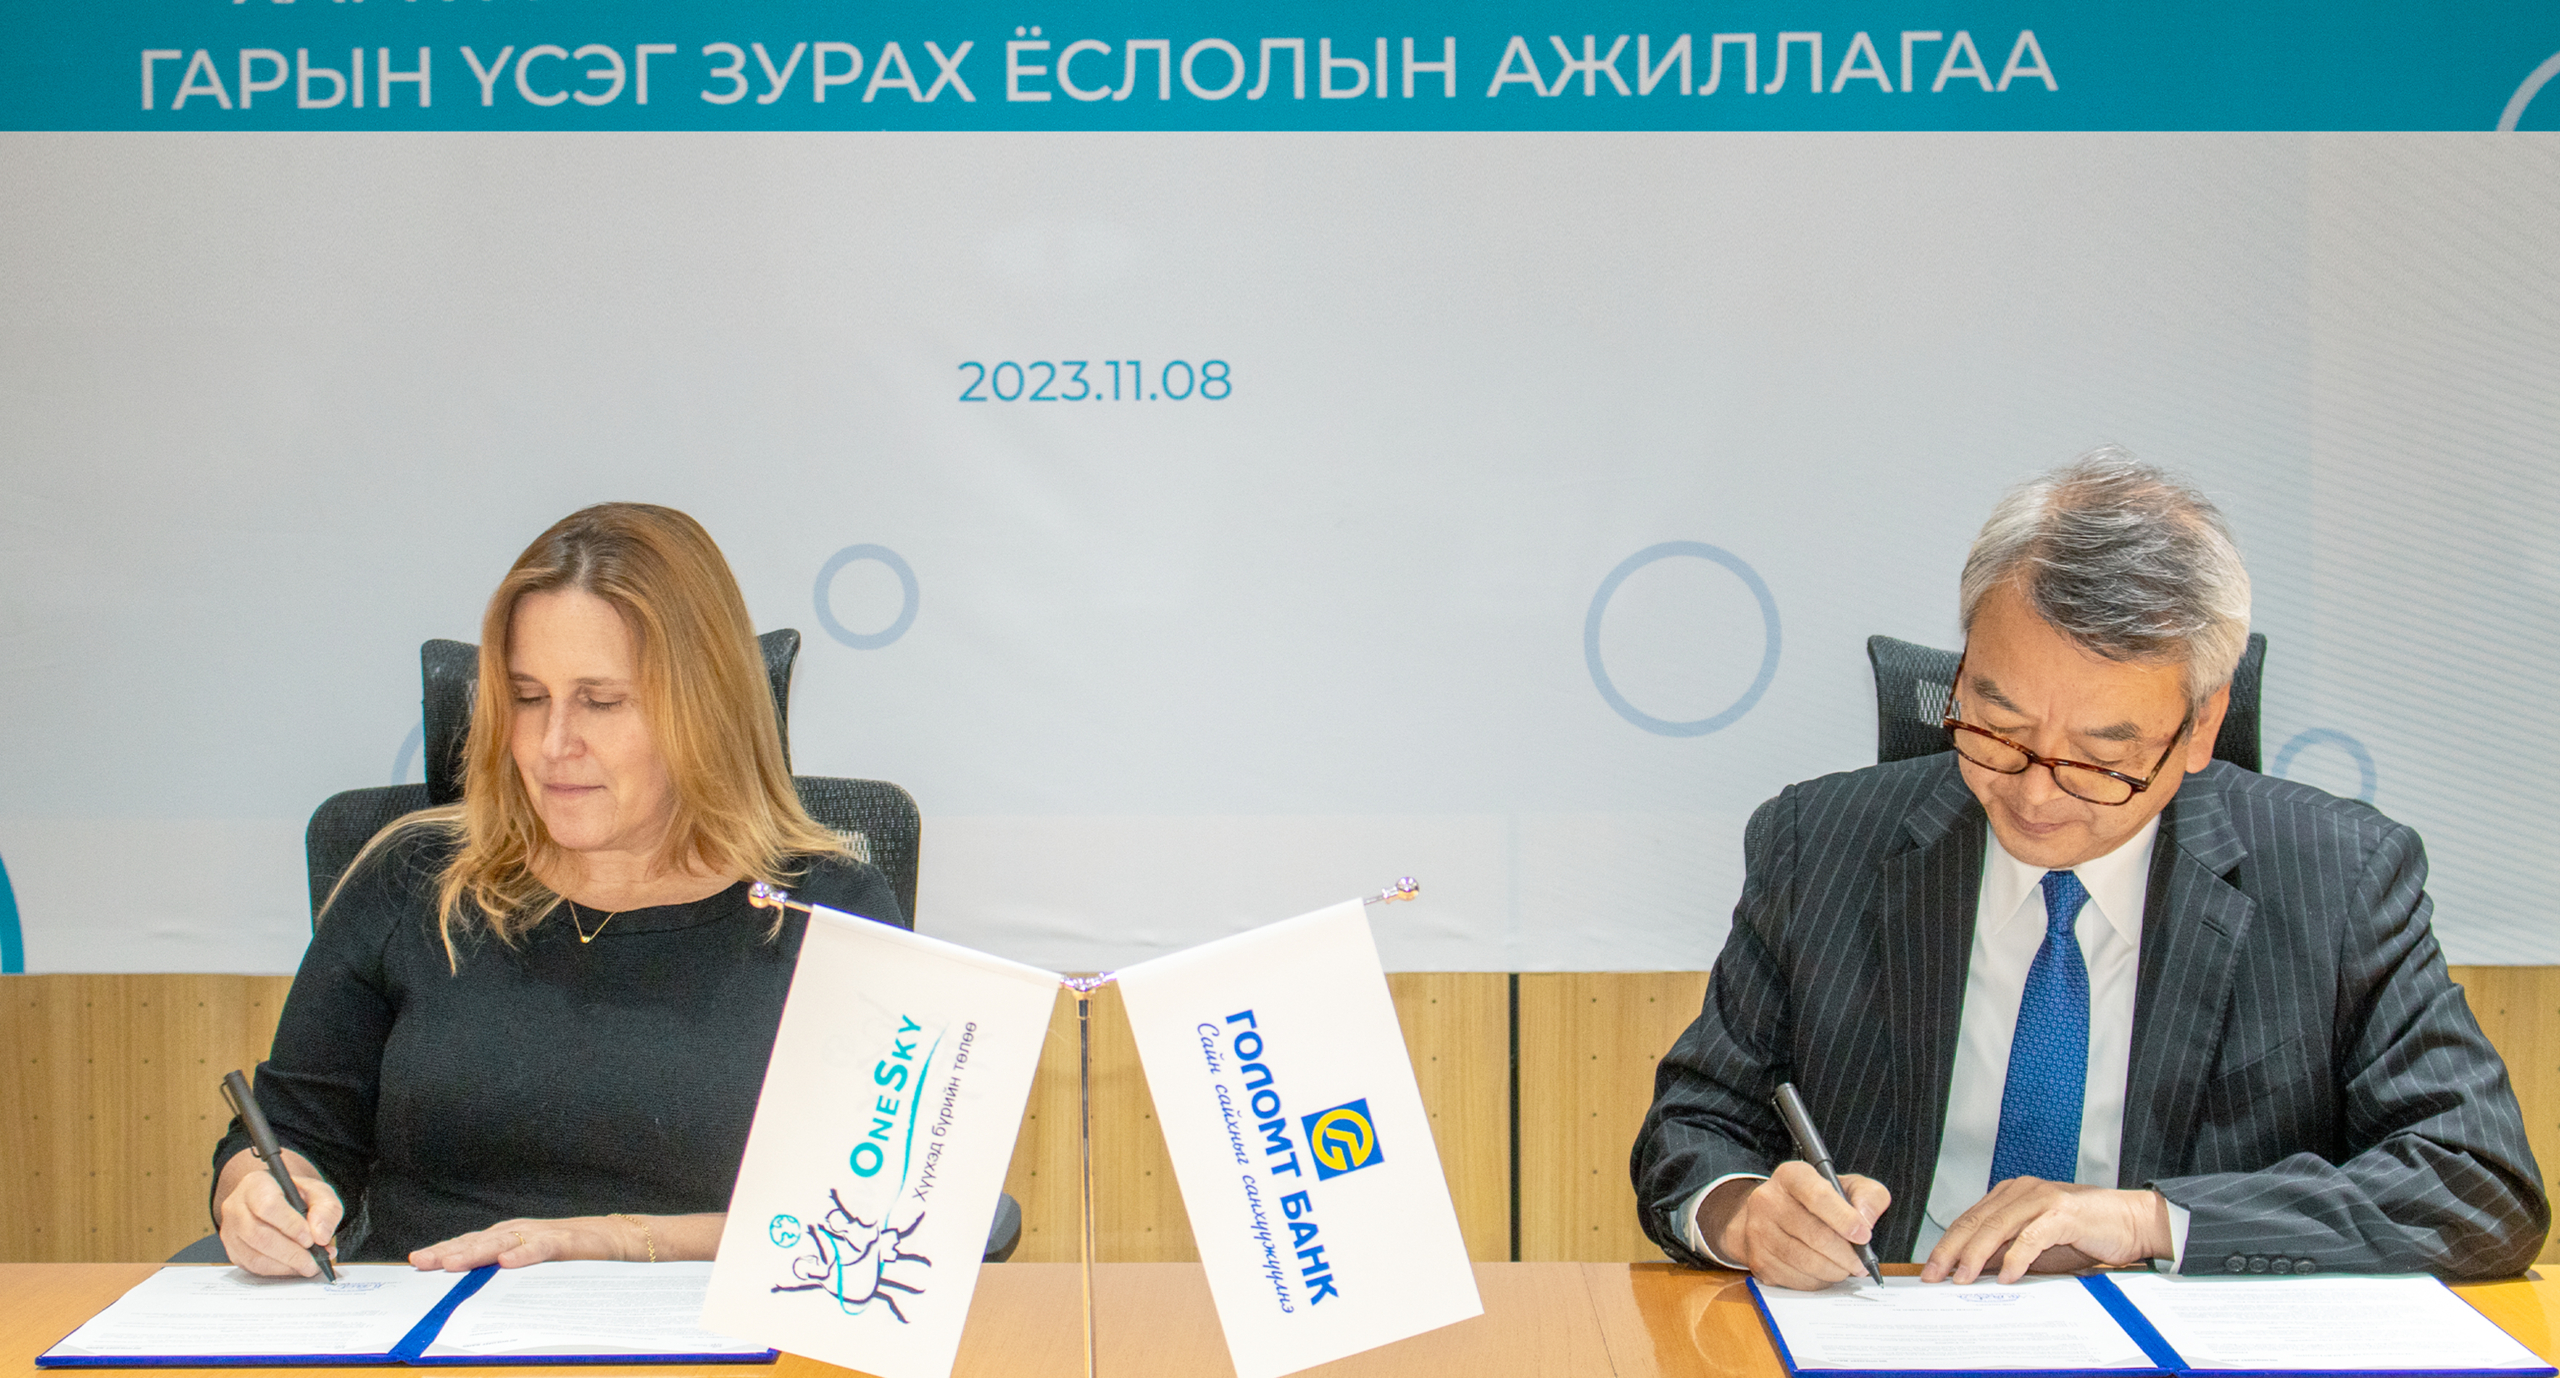 Golomt Bank signed a memorandum of understanding with OneSky for all children